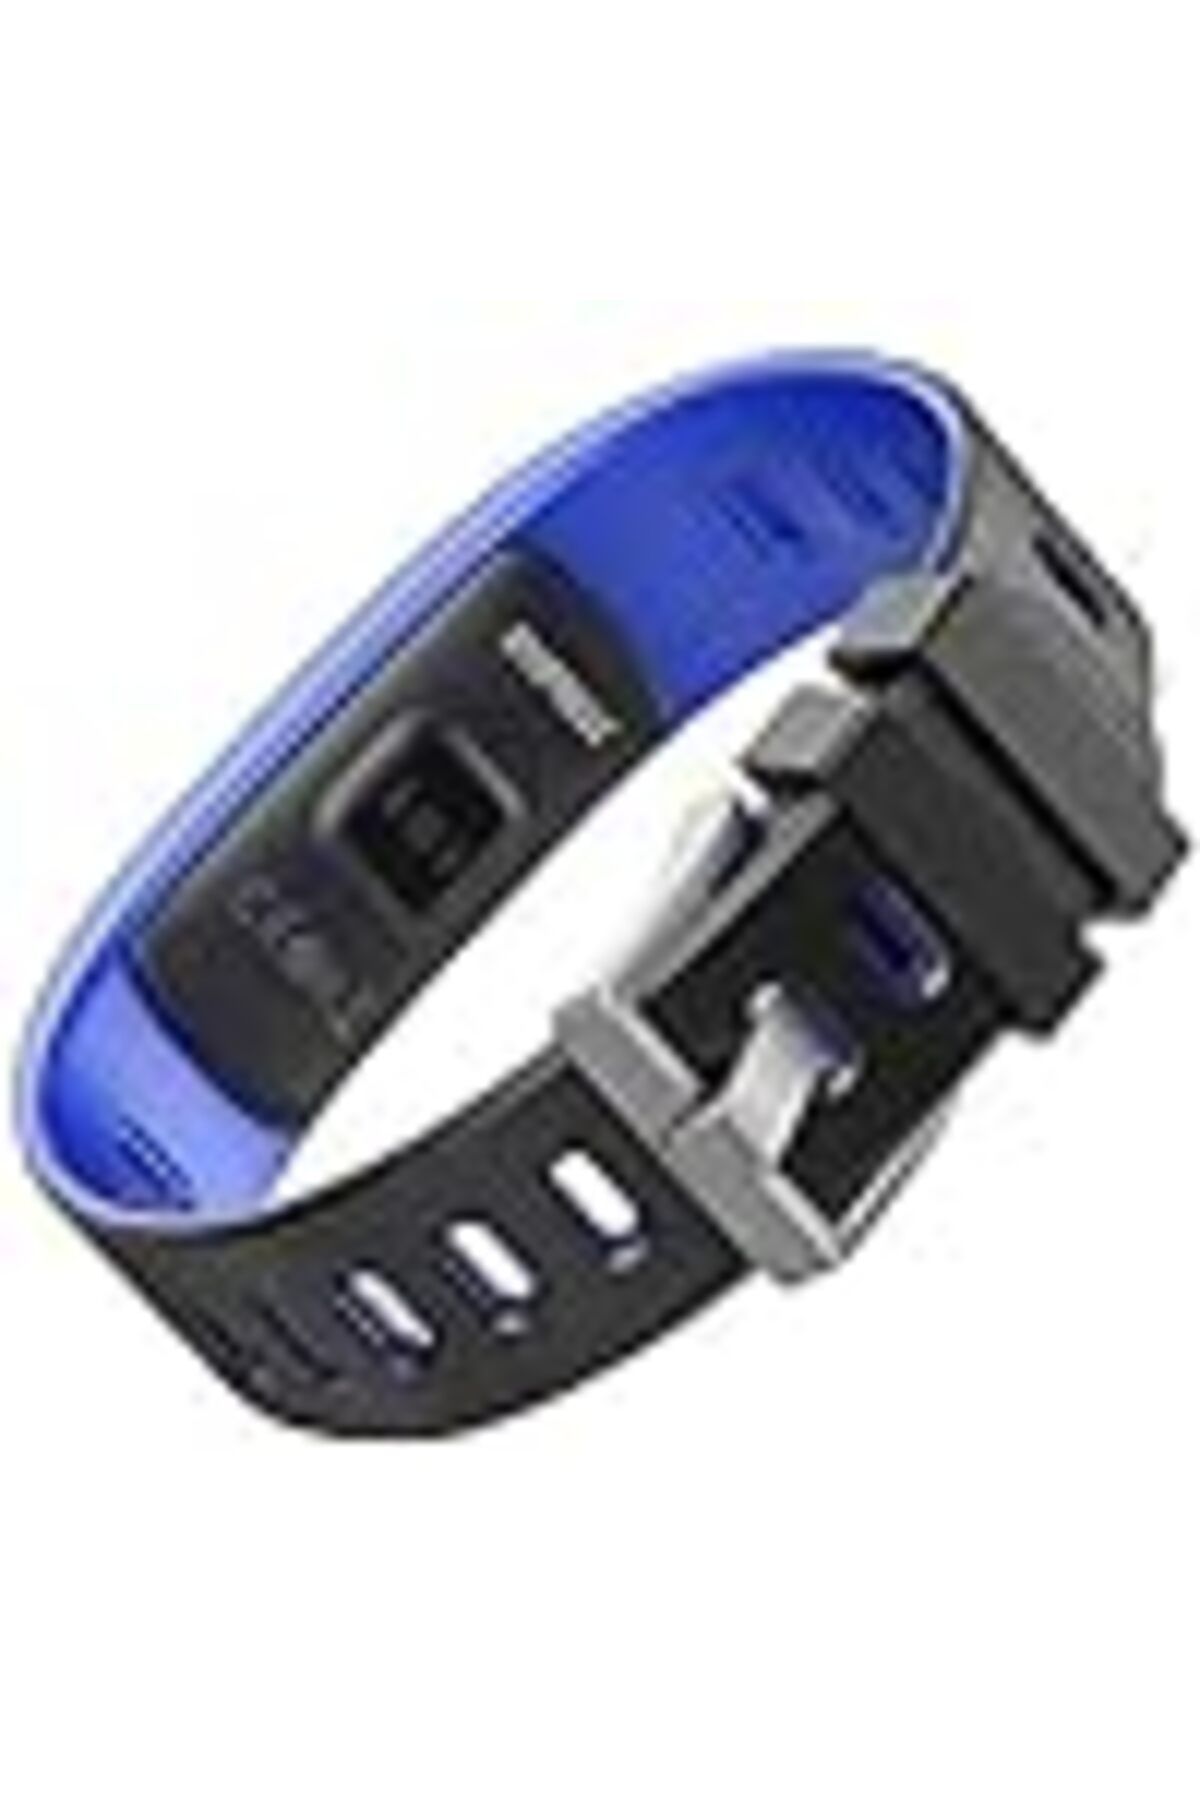 Everest Ever Fit W45 Android/ıos Smart Watch Full Dokunmatik Renkli Ekran Mavi/siyah Akıllı Bileklik